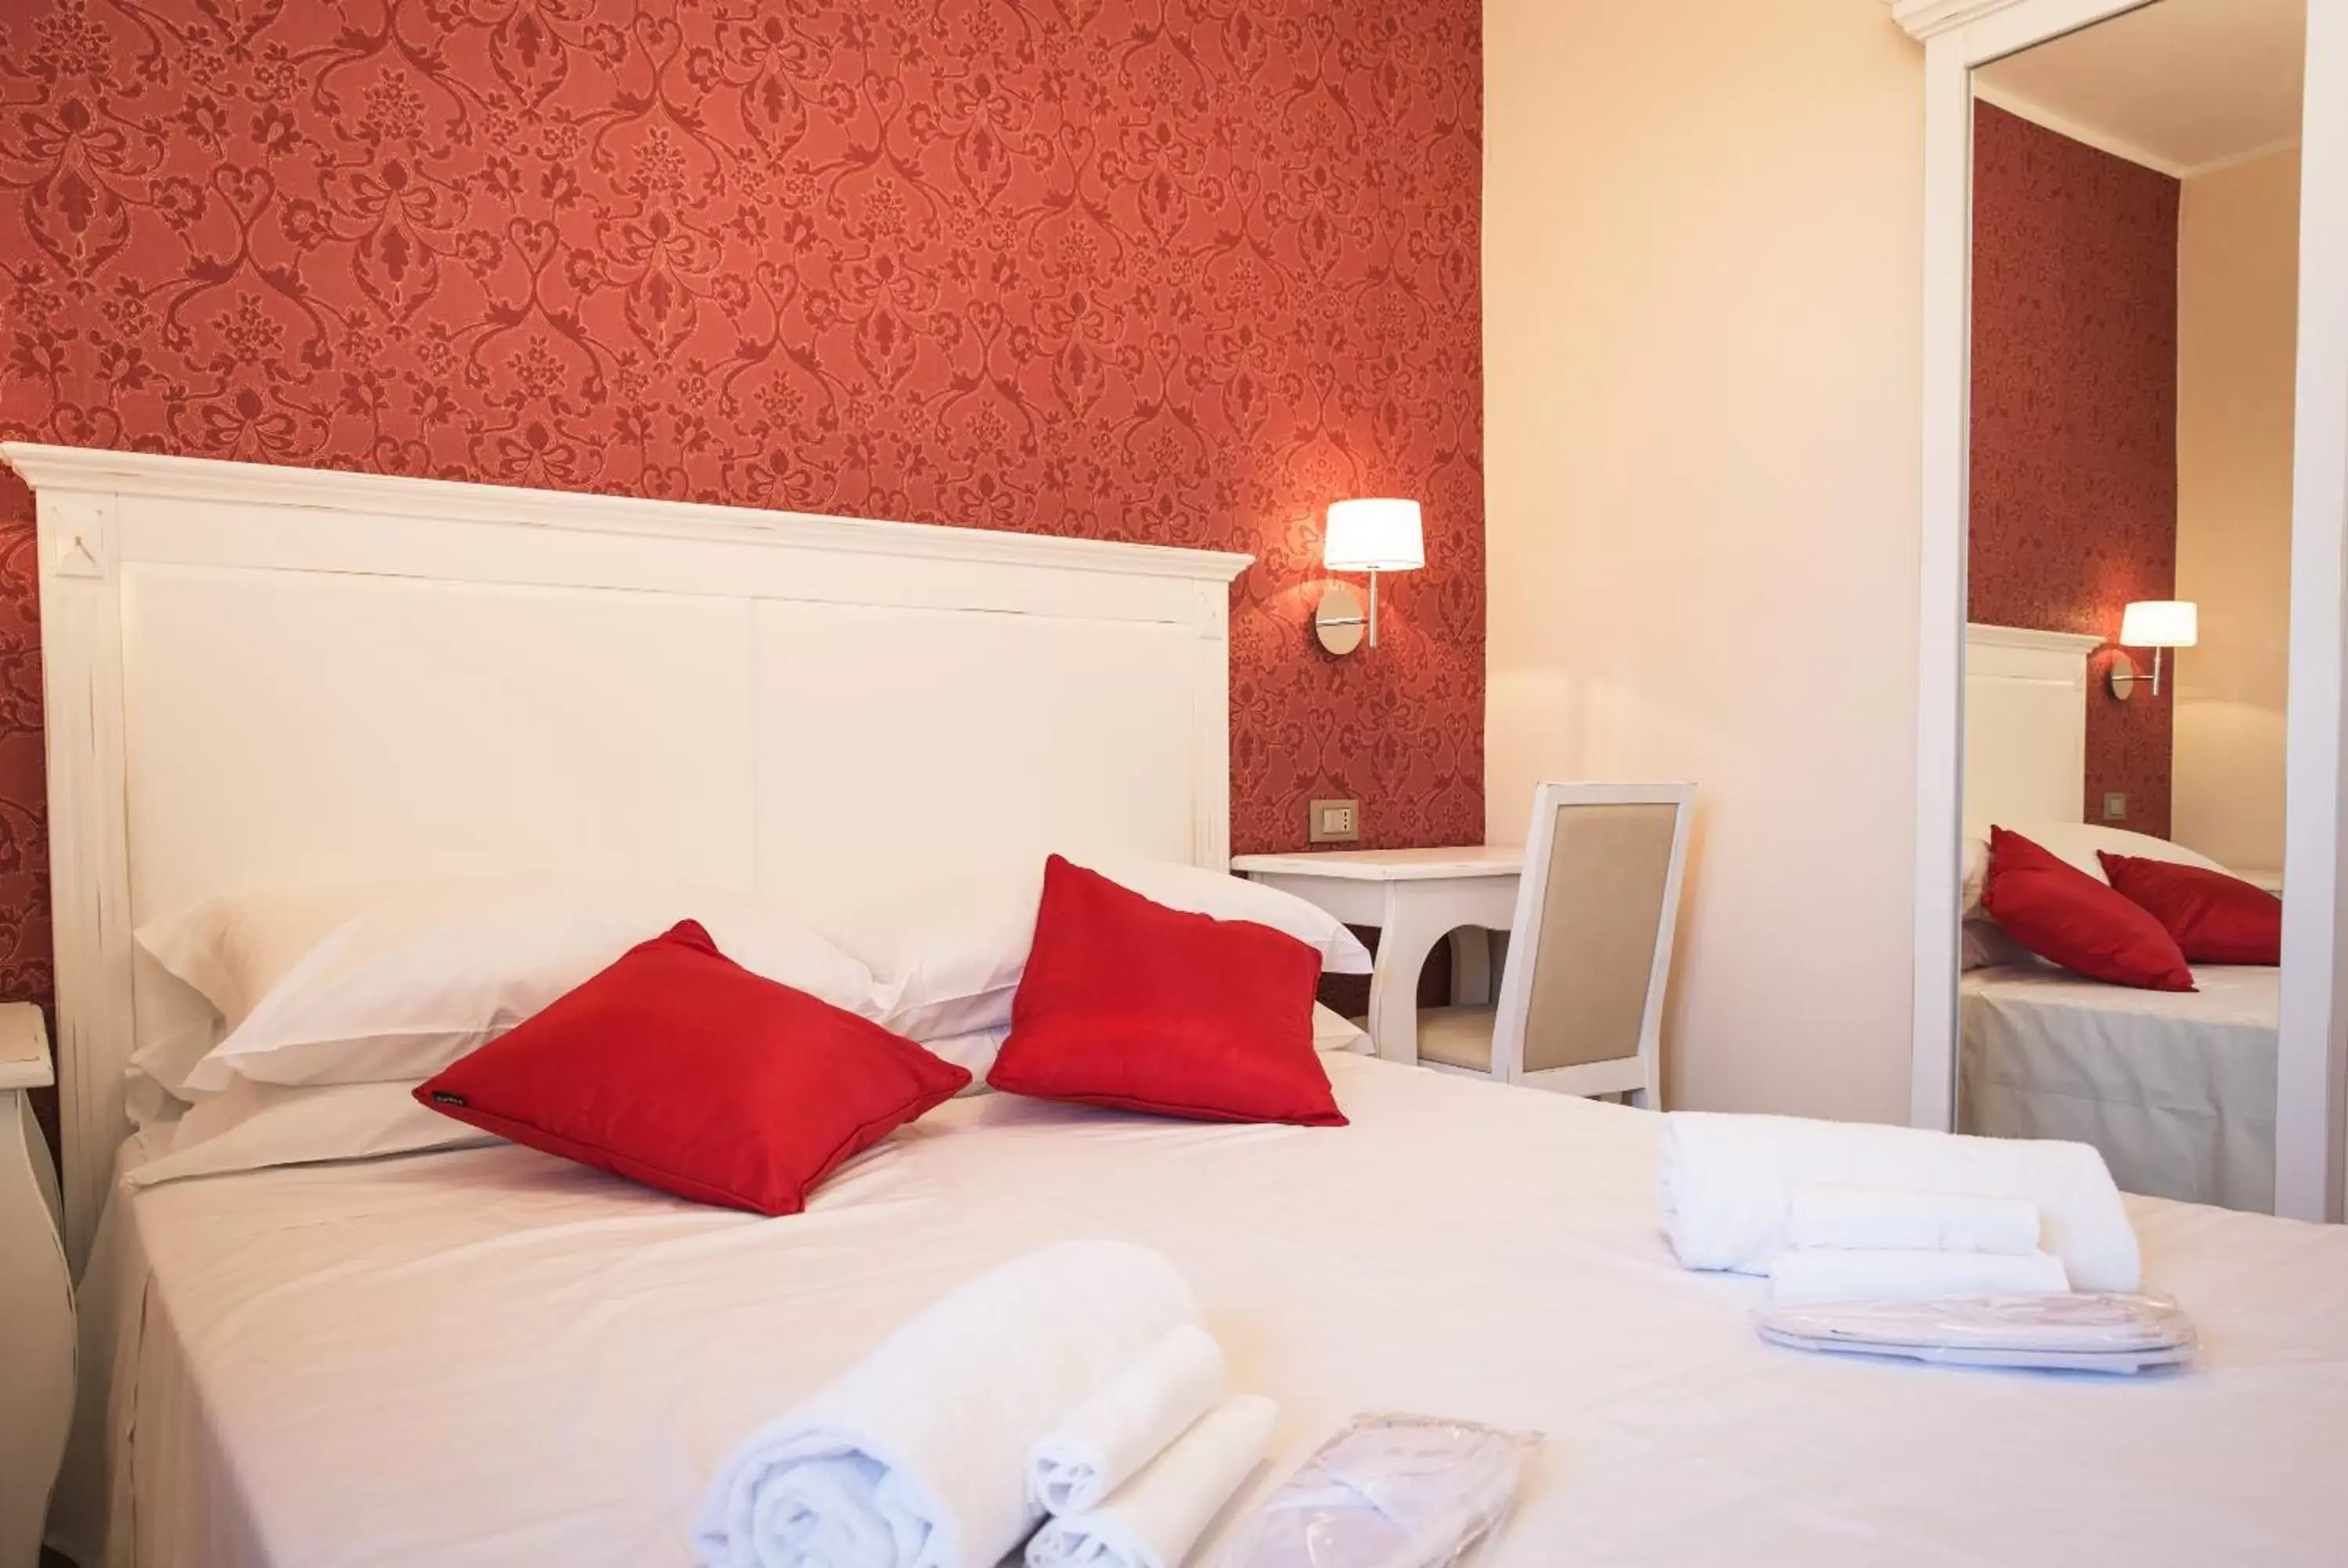 Bed, Room Photo in La Dimora di Francesco